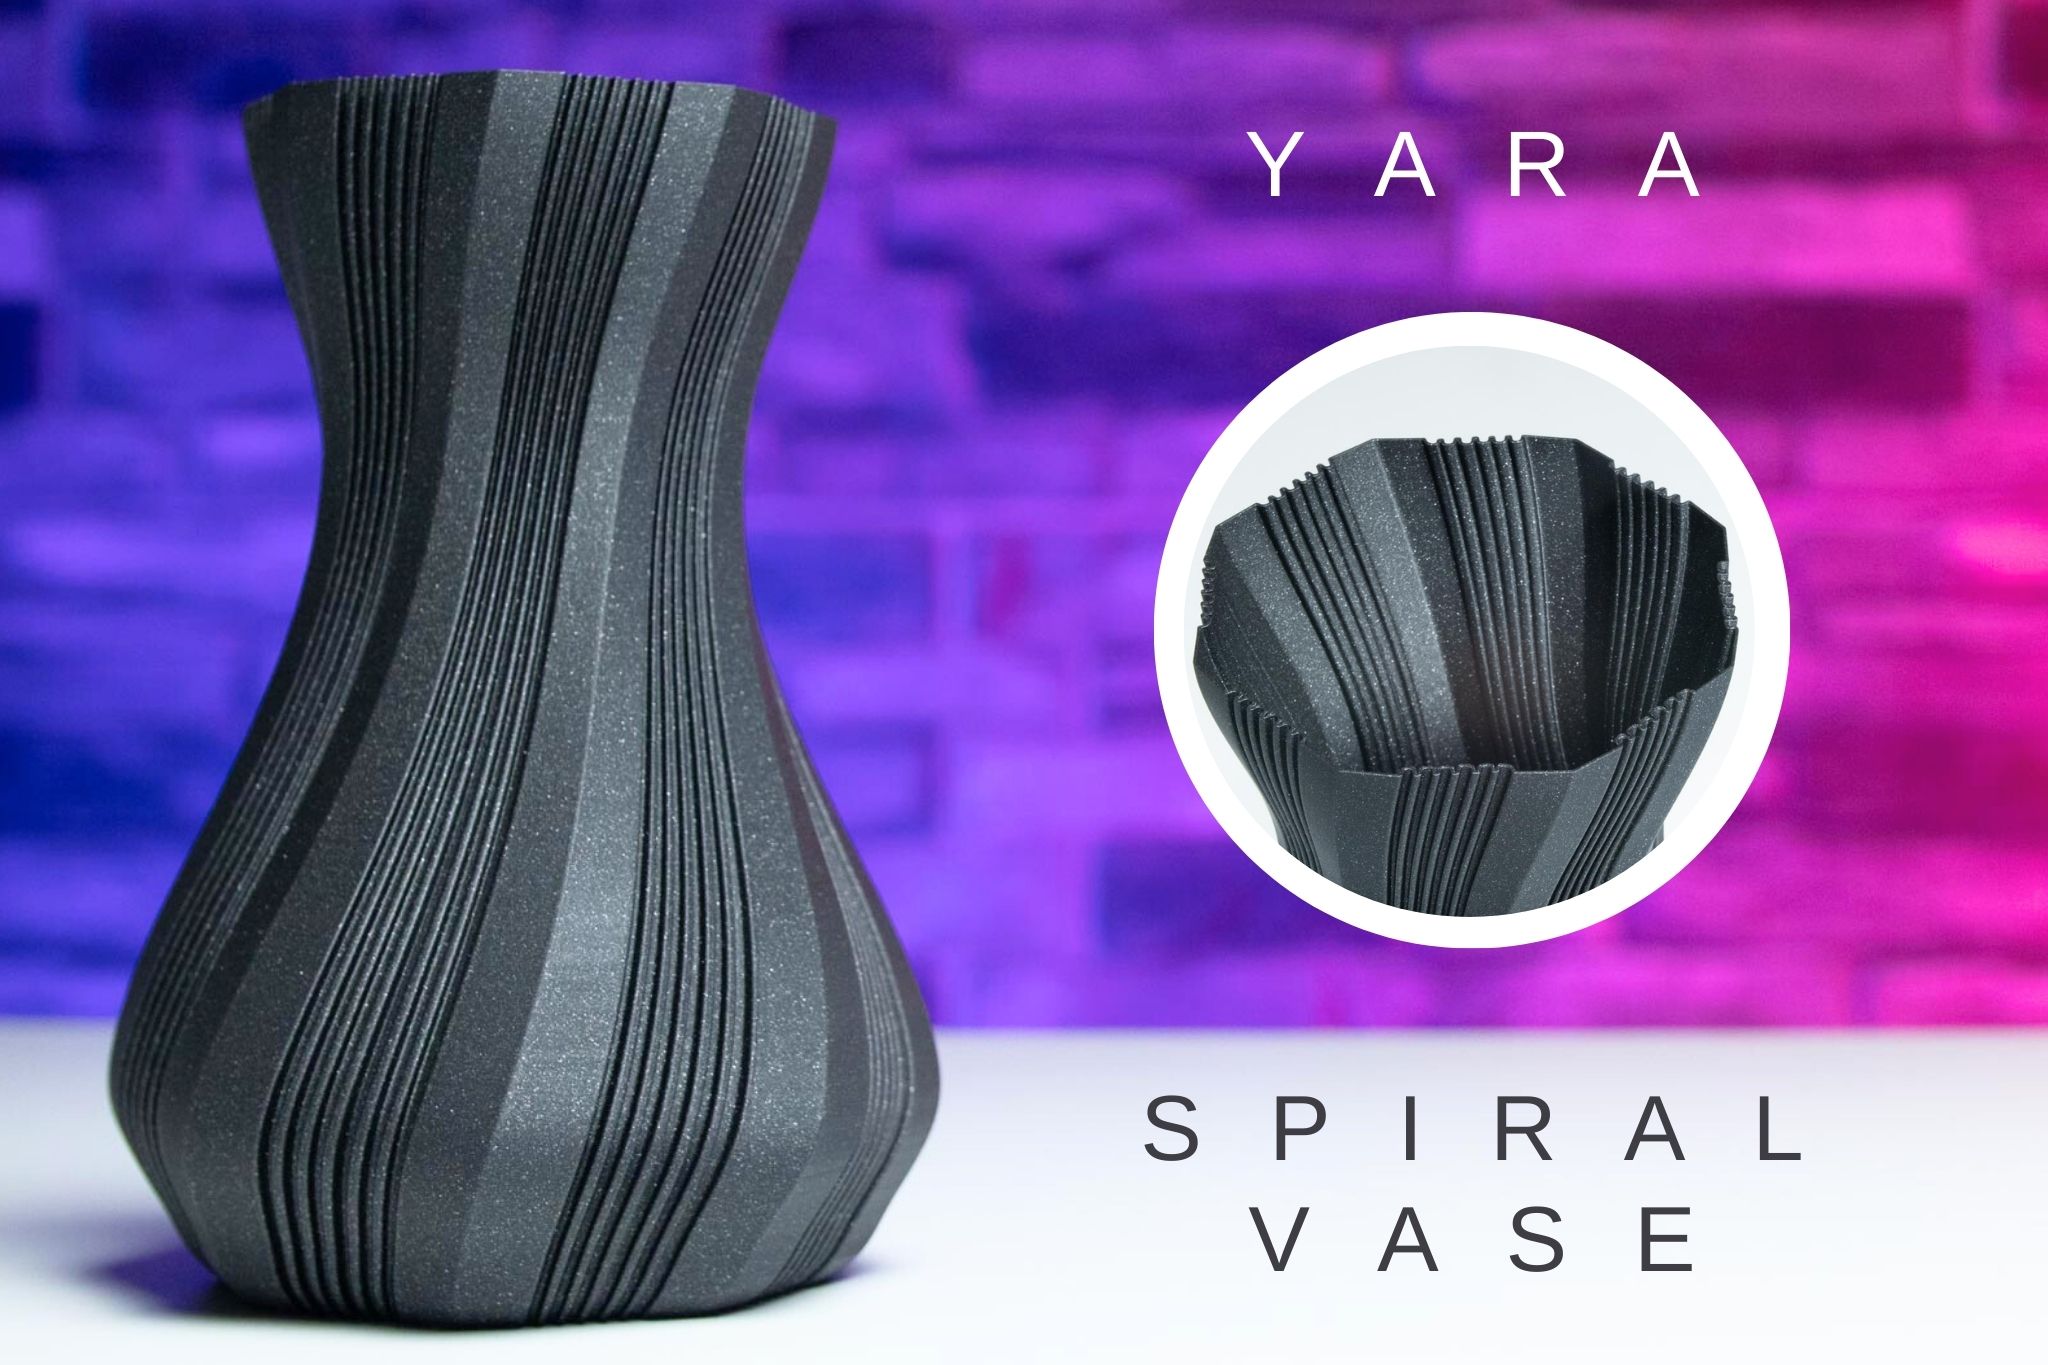 3D Printed Spiral Vase YARA